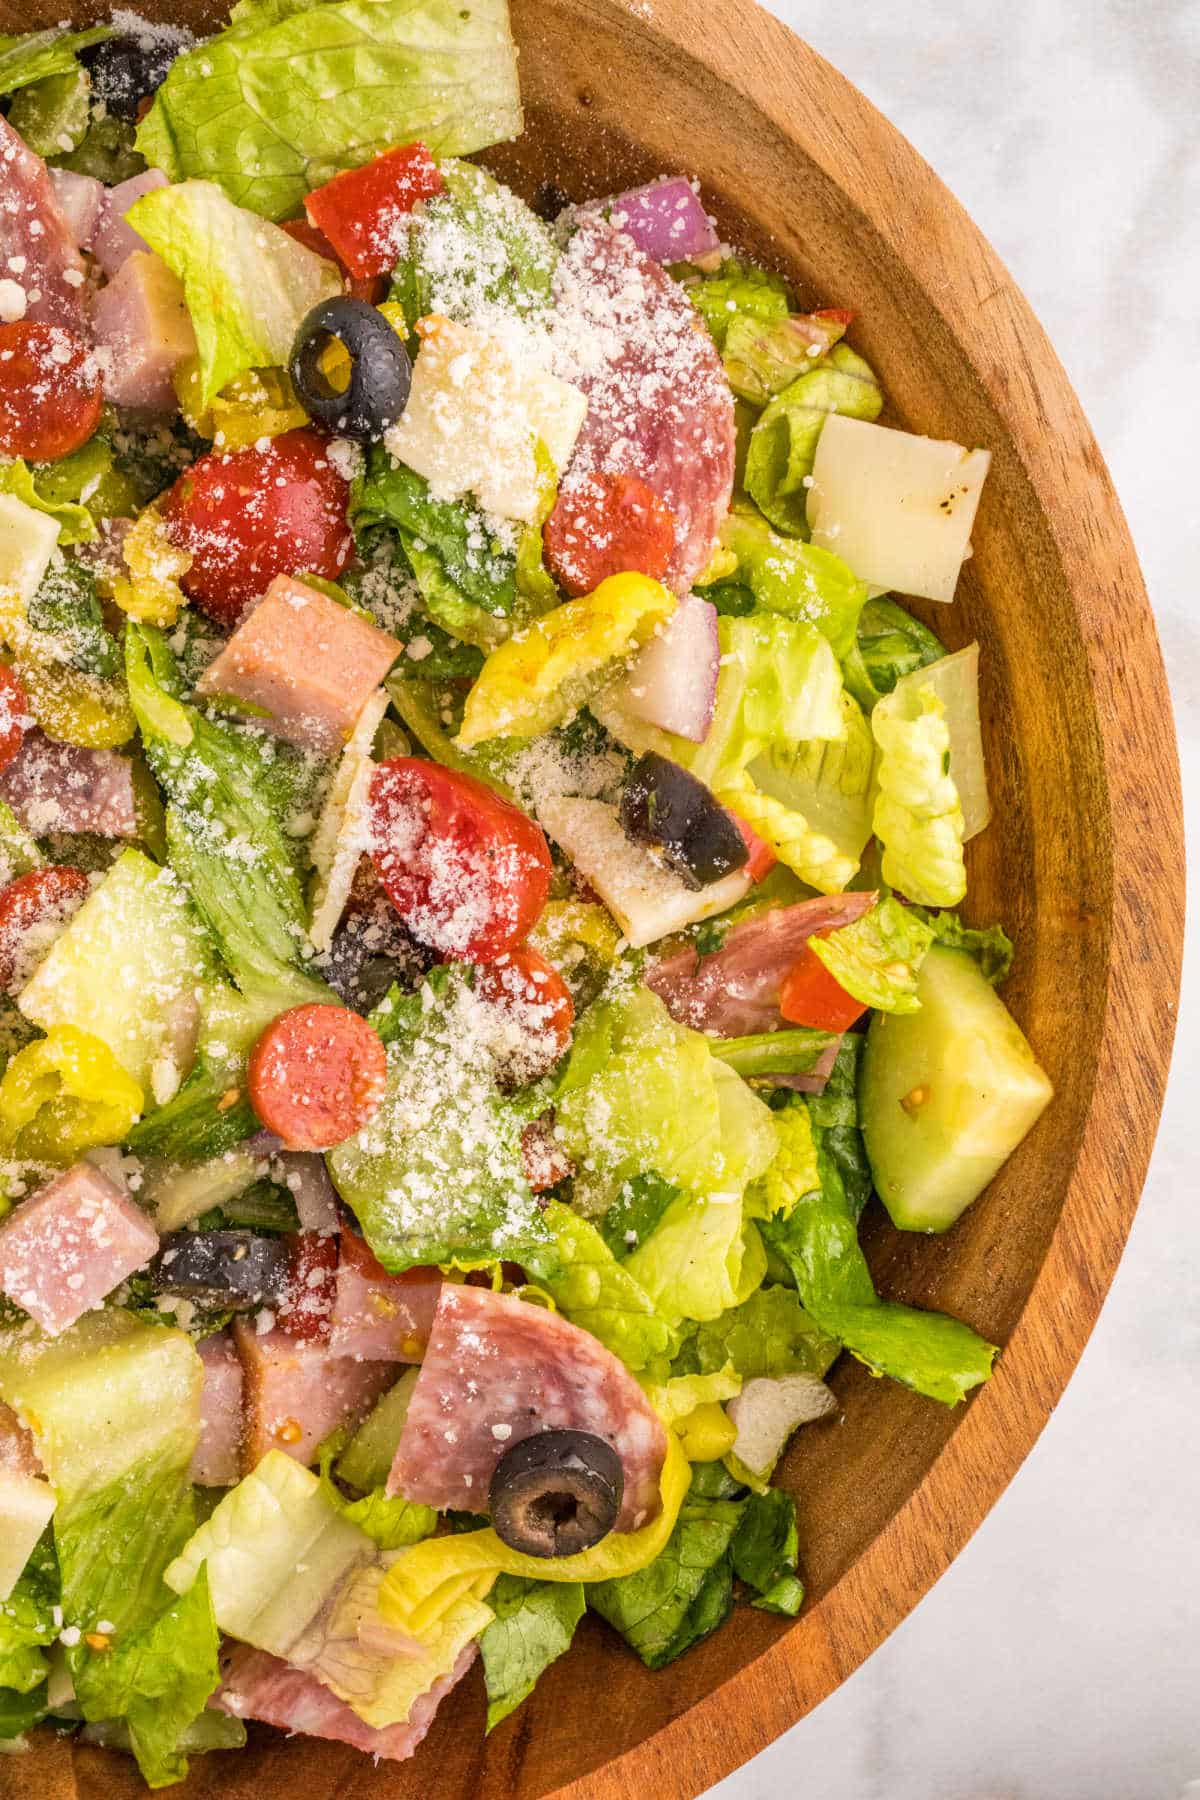 Italian sub salad in a wooden bowl